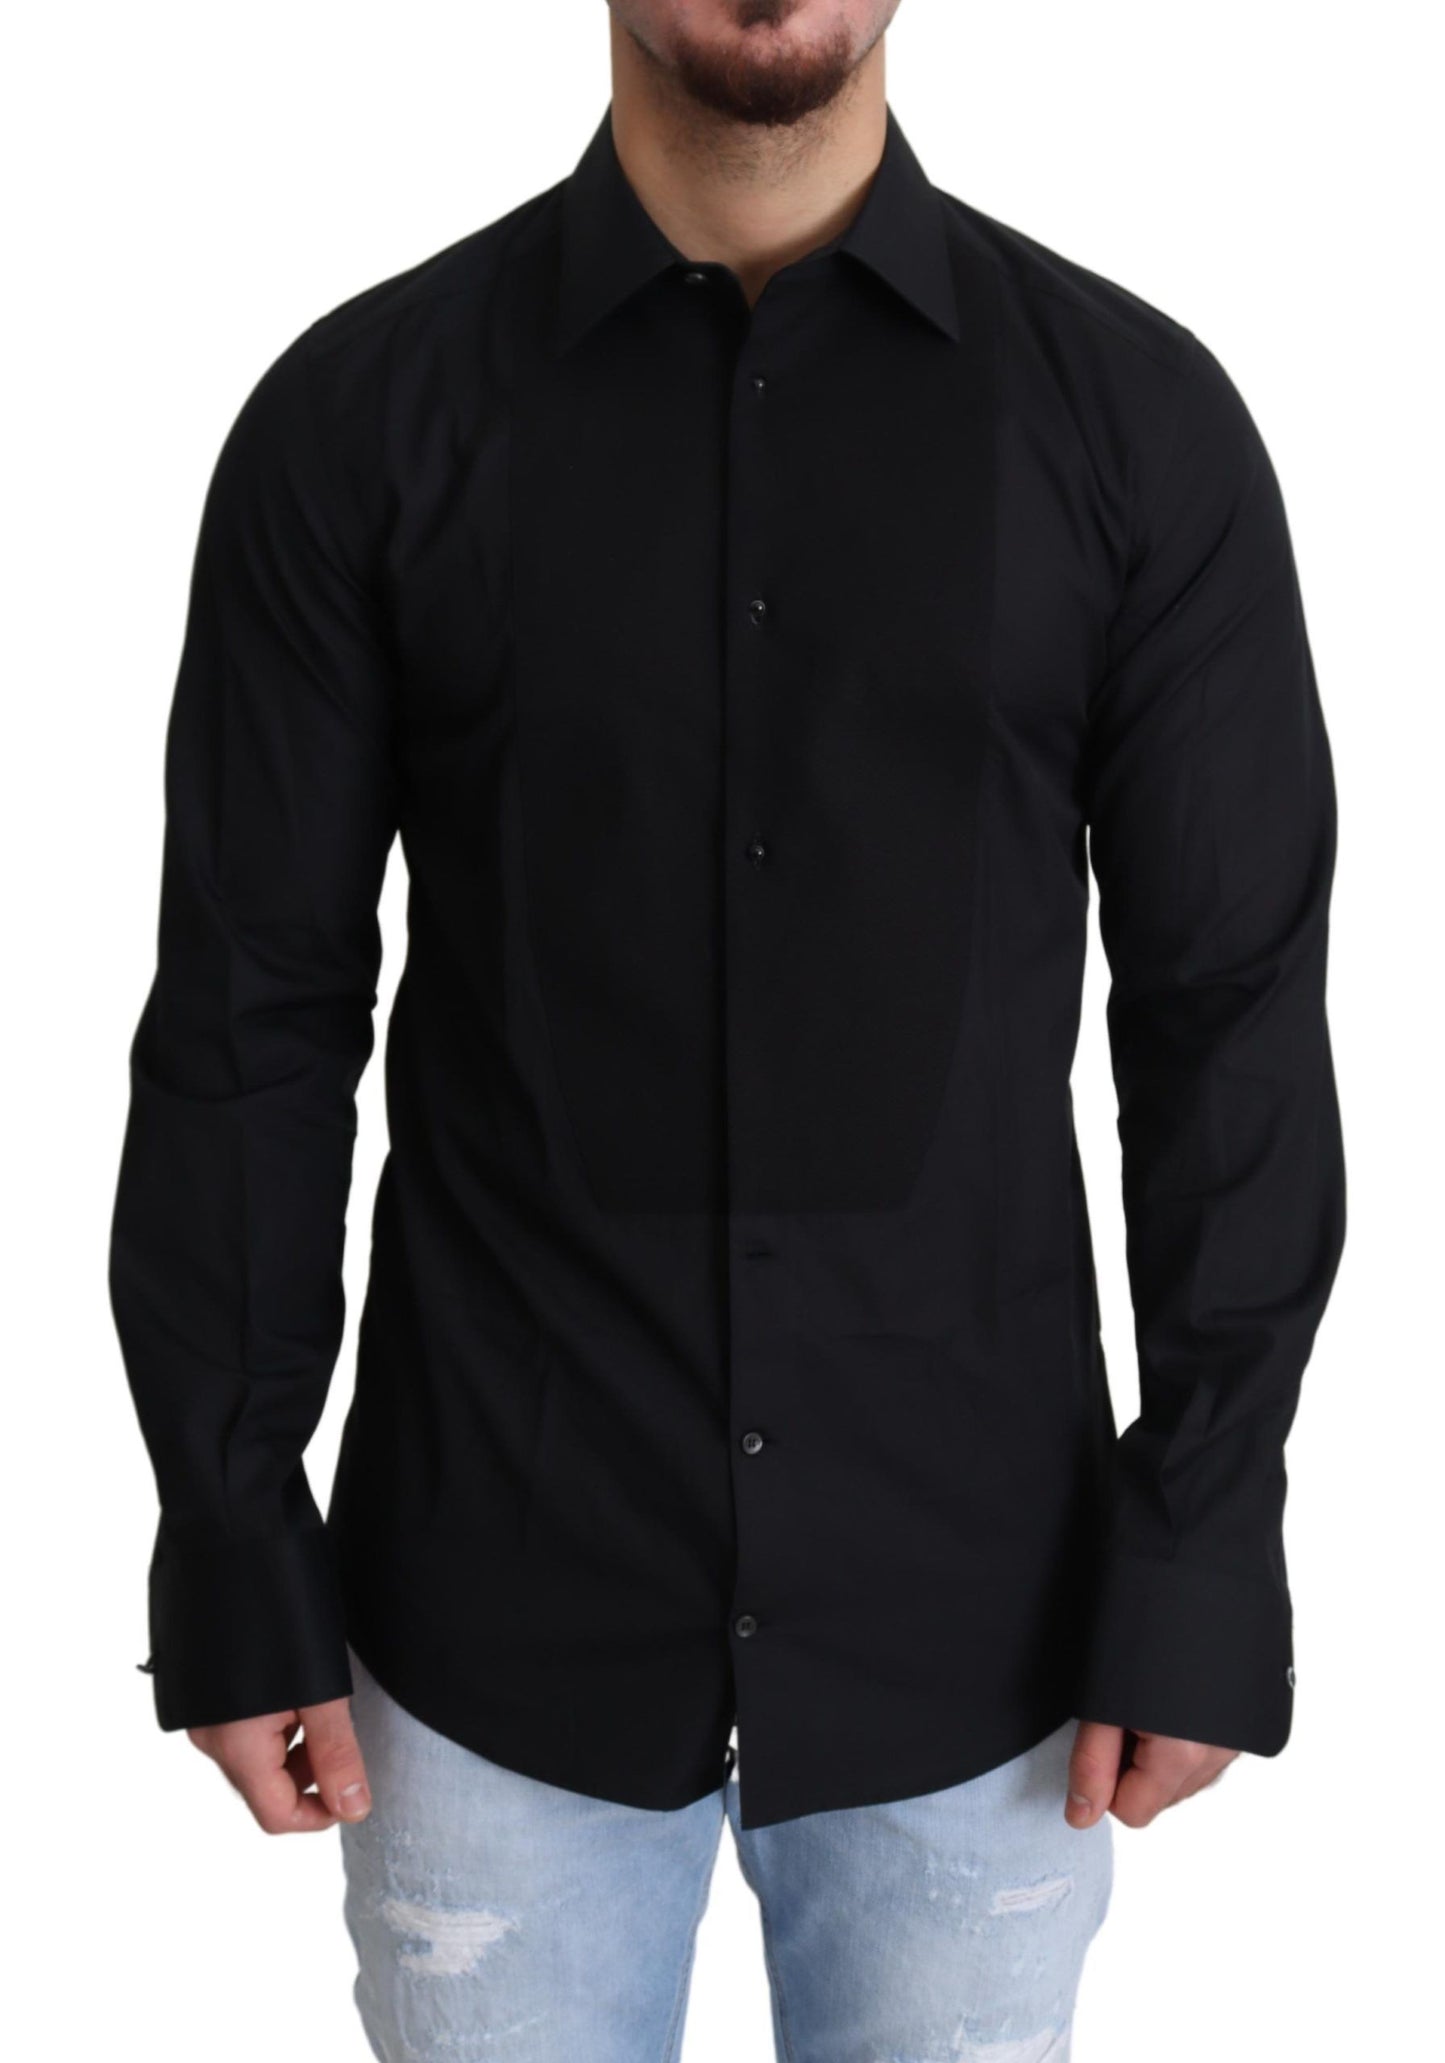 Elegant Black Cotton Dress Shirt